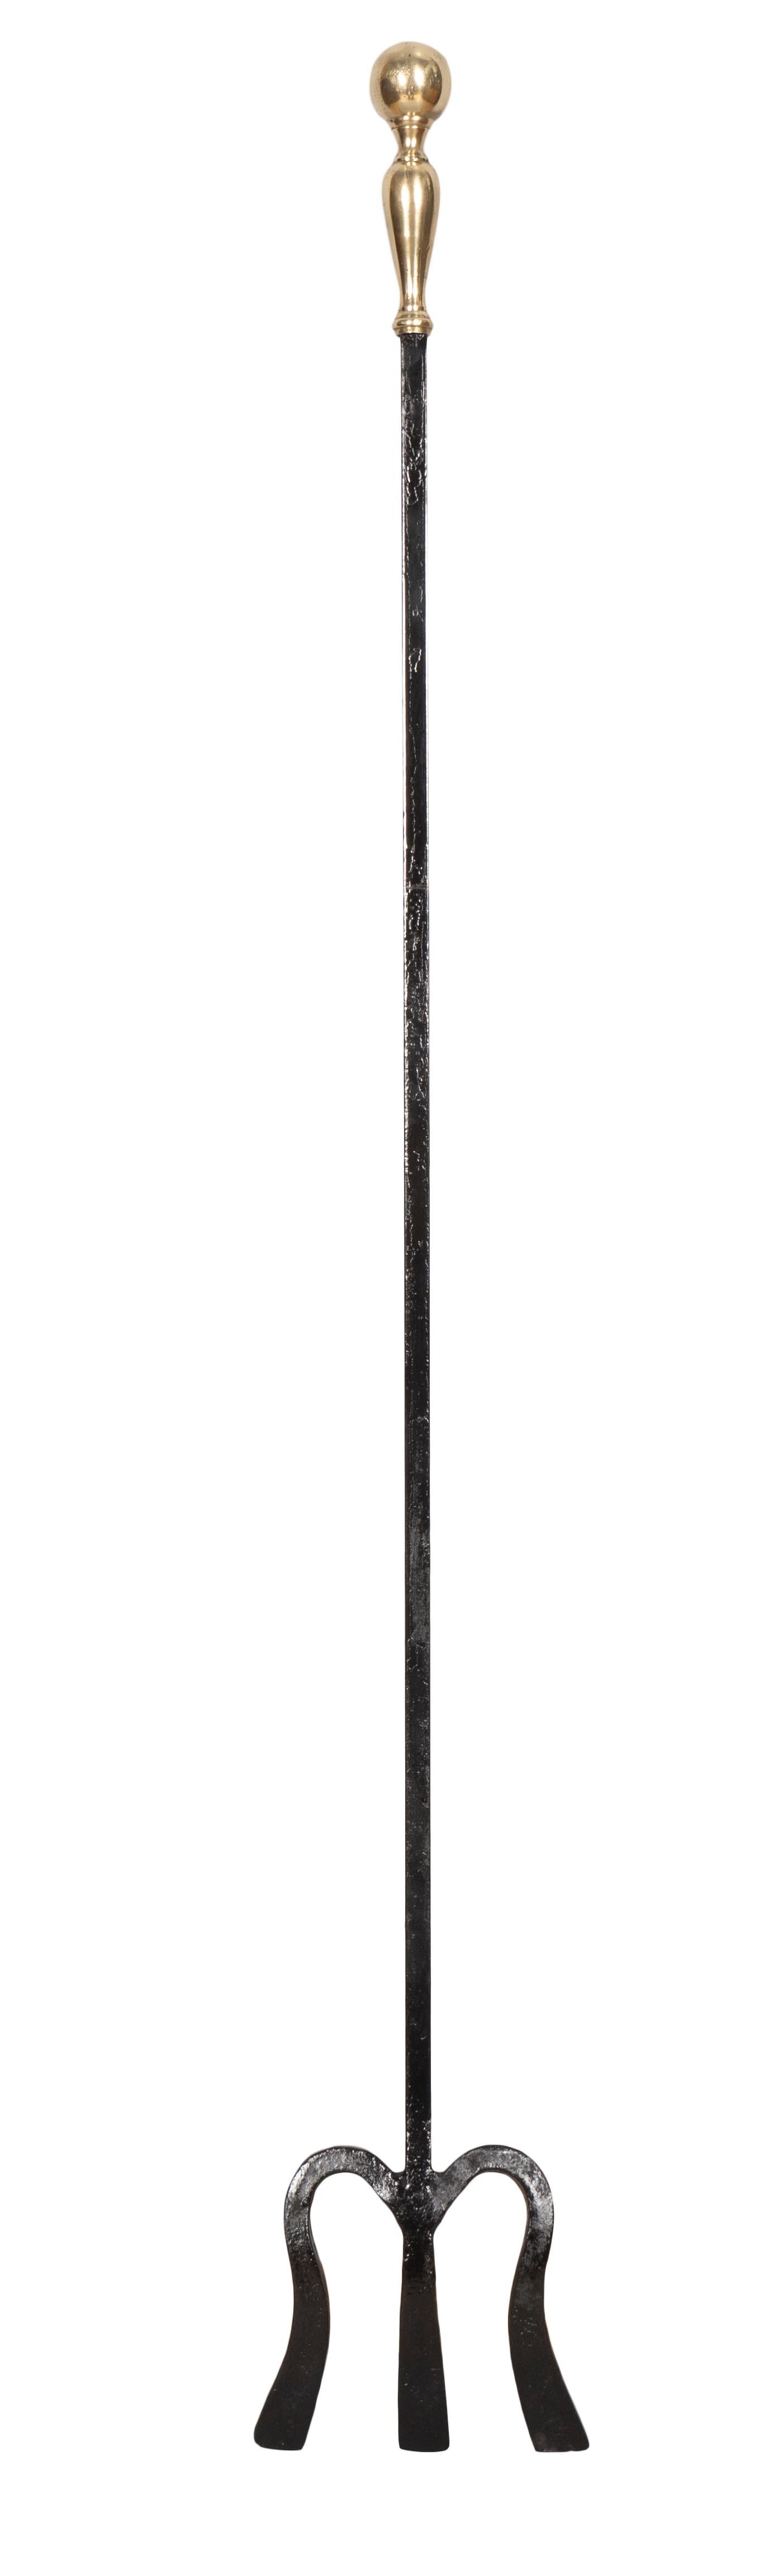 fireplace metal stick